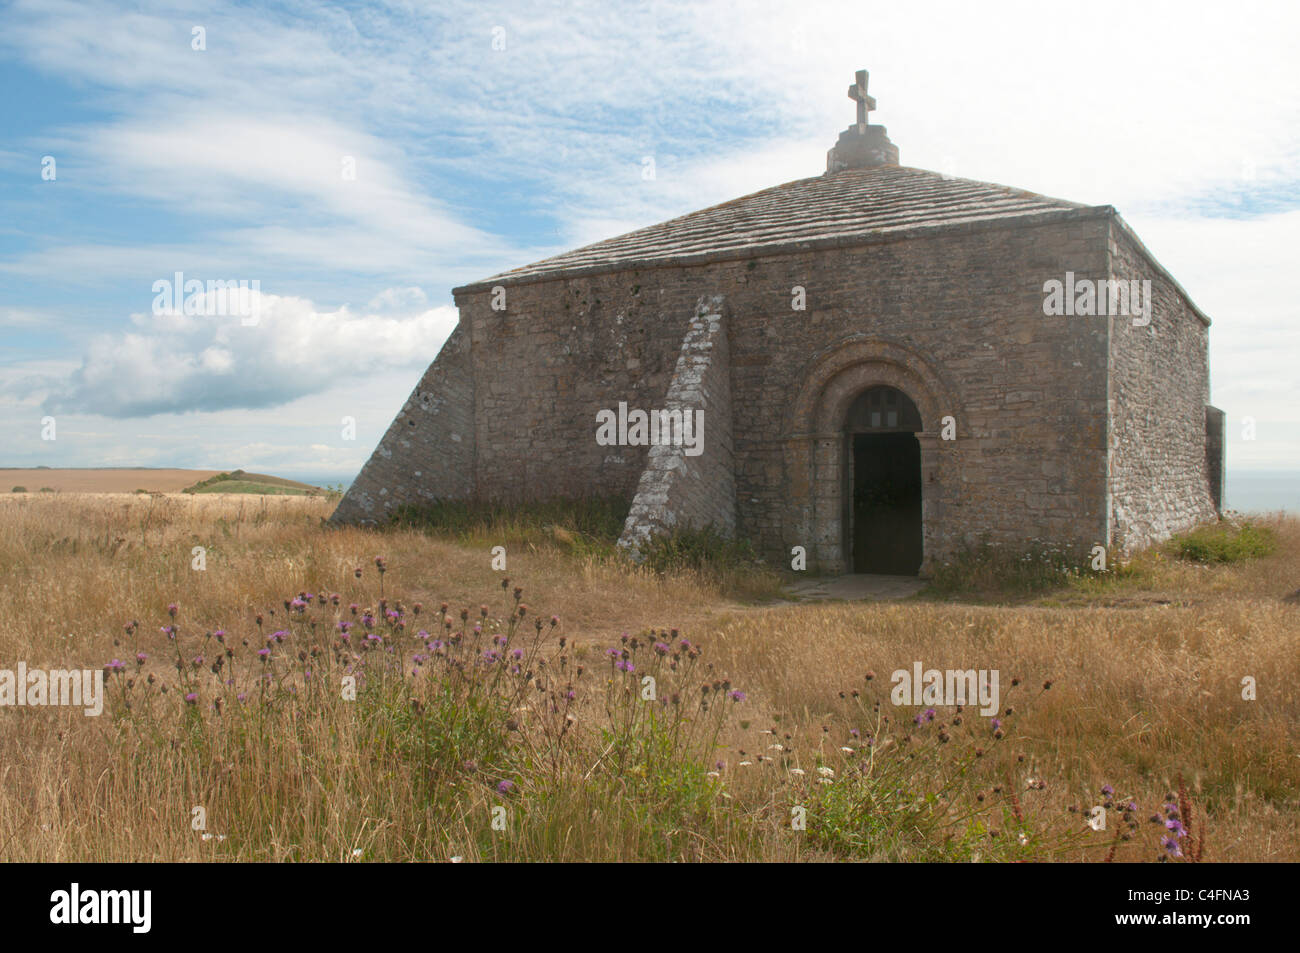 St Aldhelm's Chapel on St Aldhelm's or St Alban's Head, Dorset, UK. July. Stock Photo